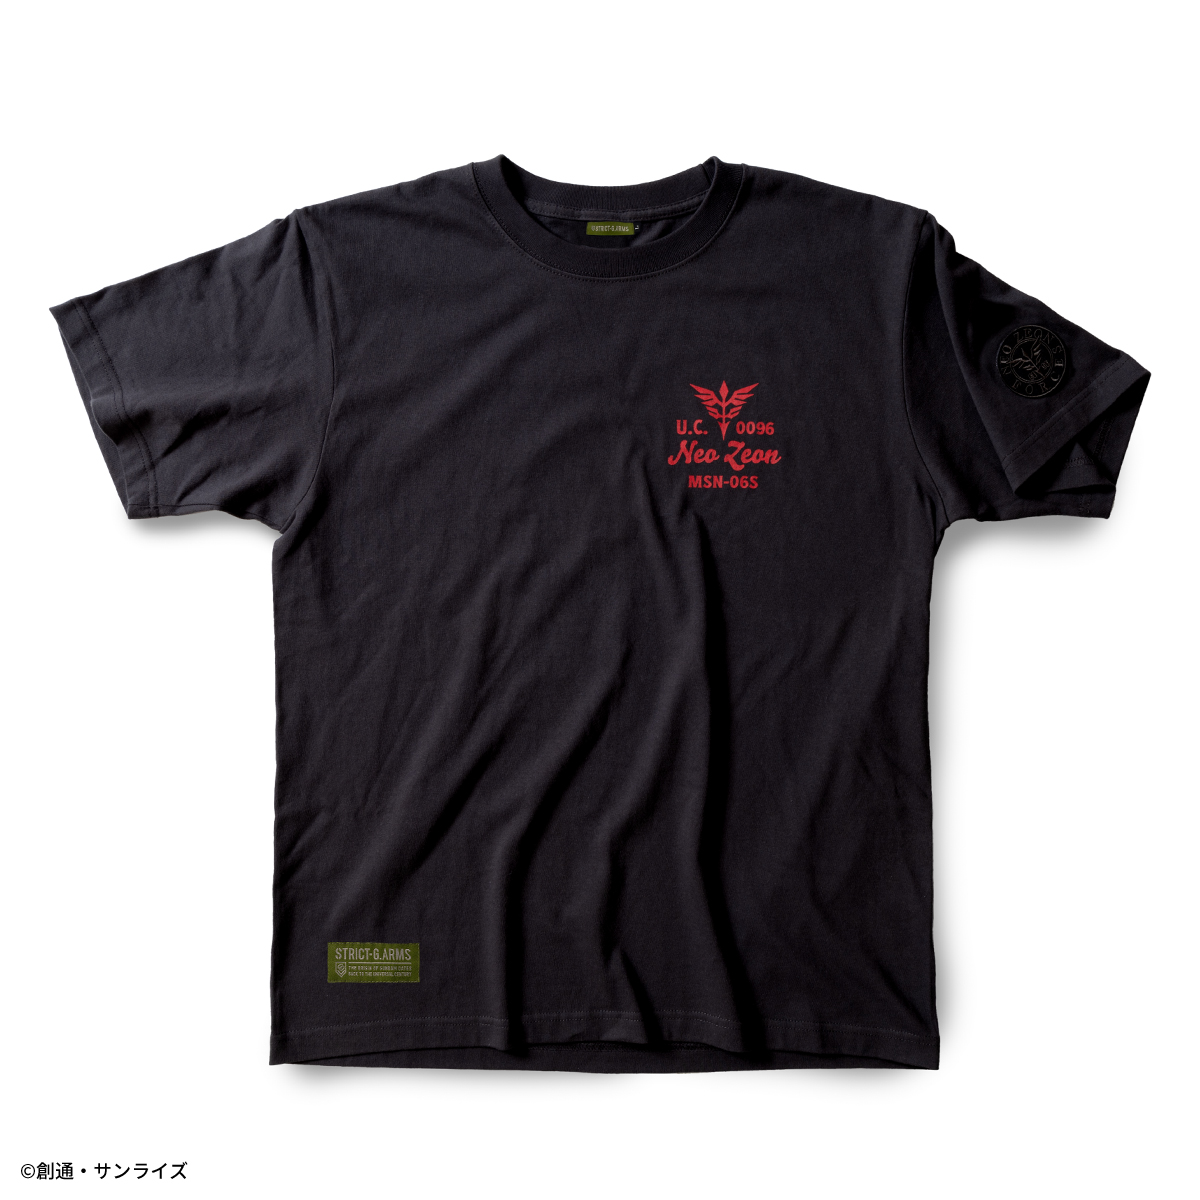 STRICT-G.ARMS『機動戦士ガンダムUC』ワッペン付半袖Tシャツ シナンジュ